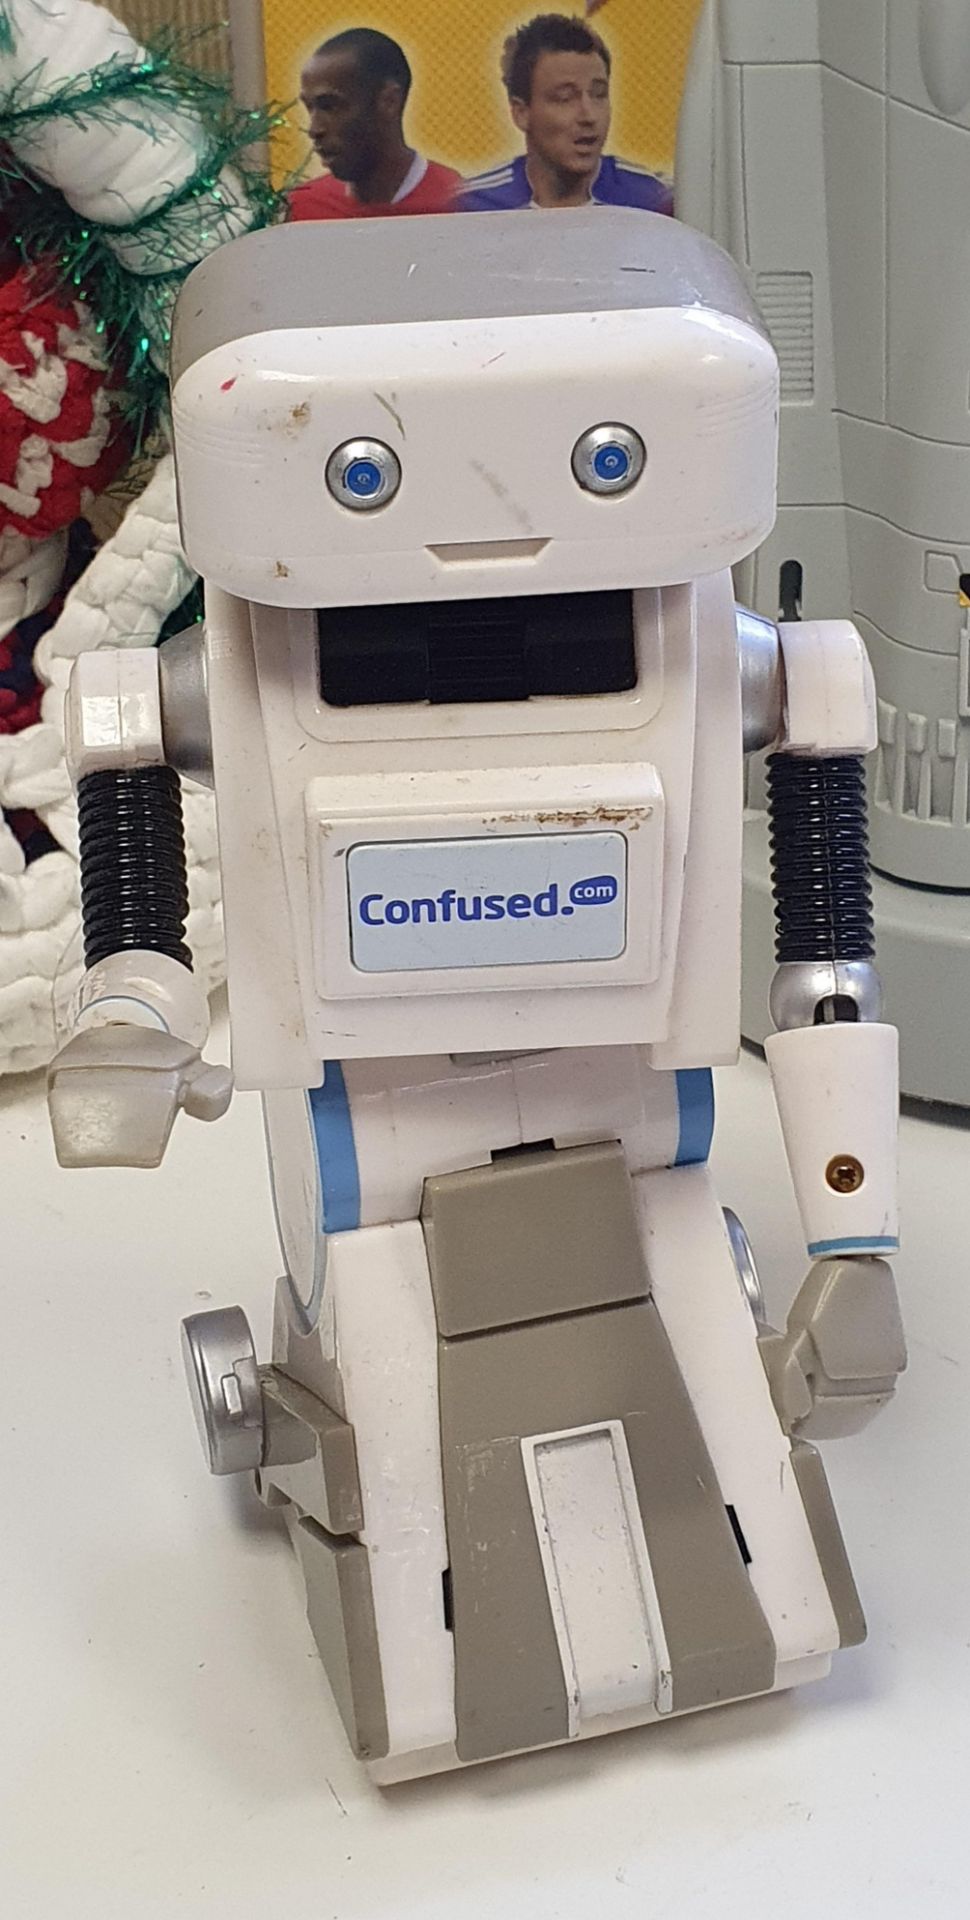 Confused.com collectors Robot